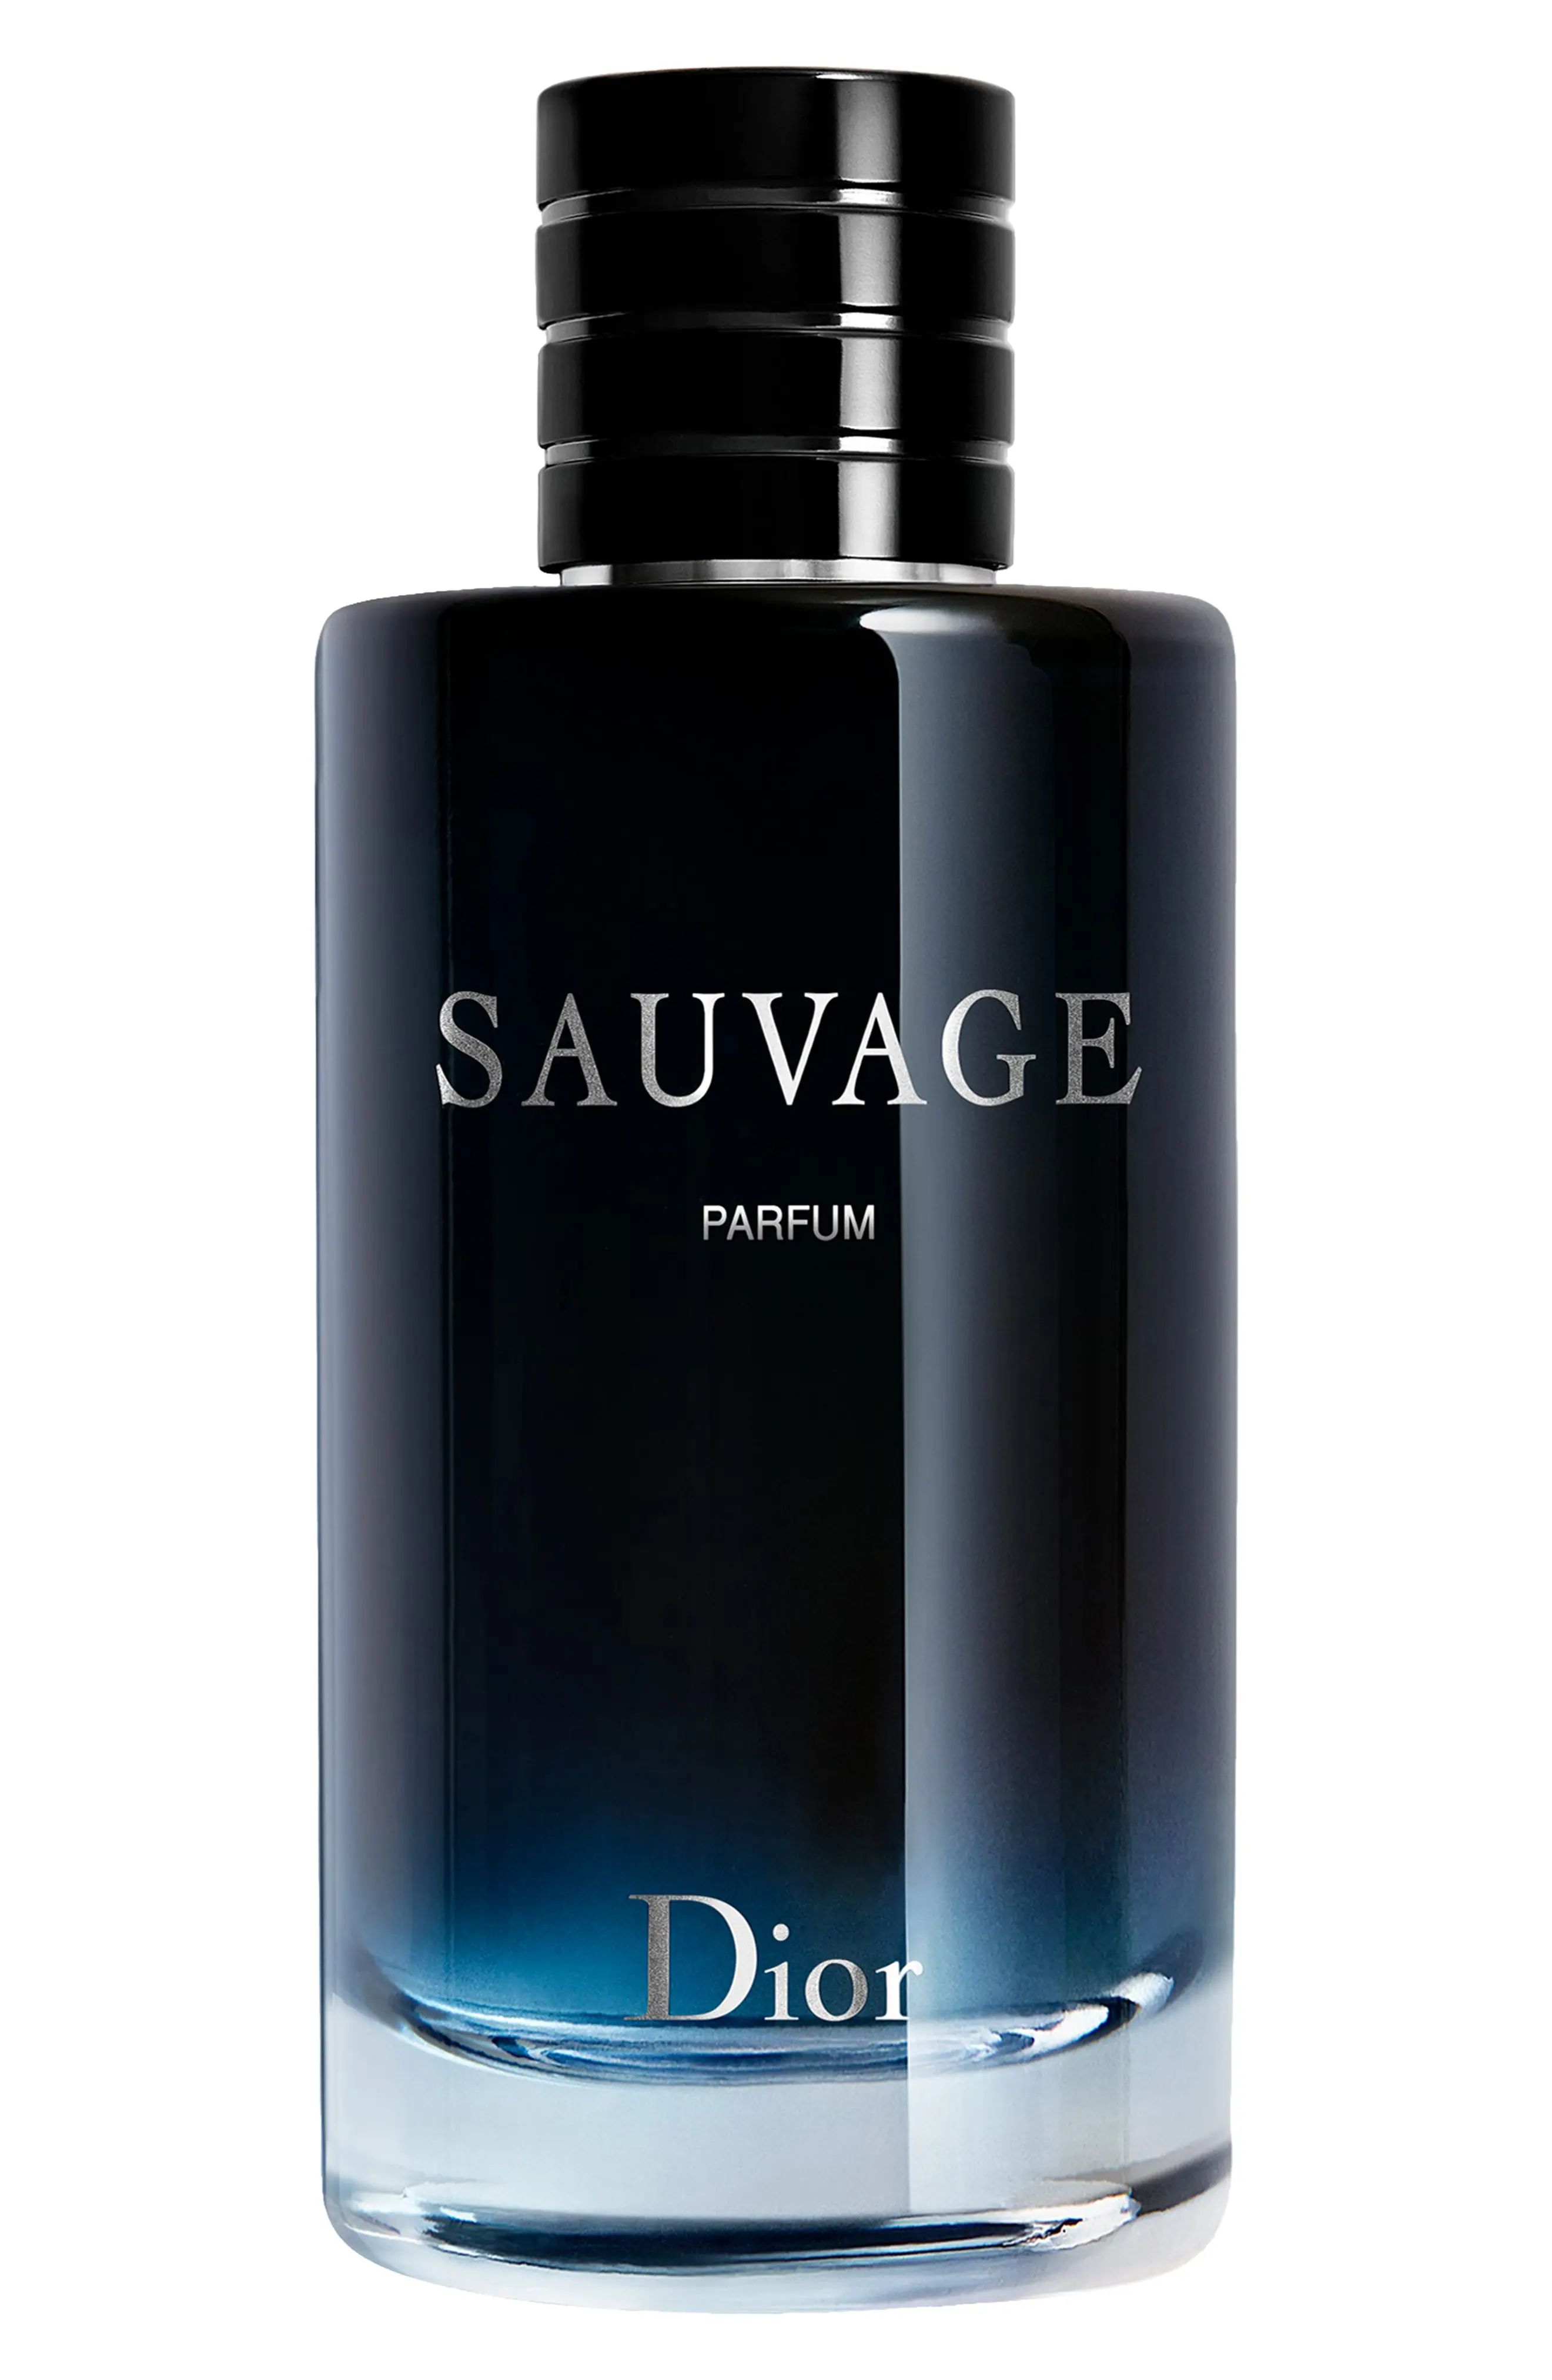 Dior Sauvage Parfum at Nordstrom, Size 6.7 Oz | Nordstrom